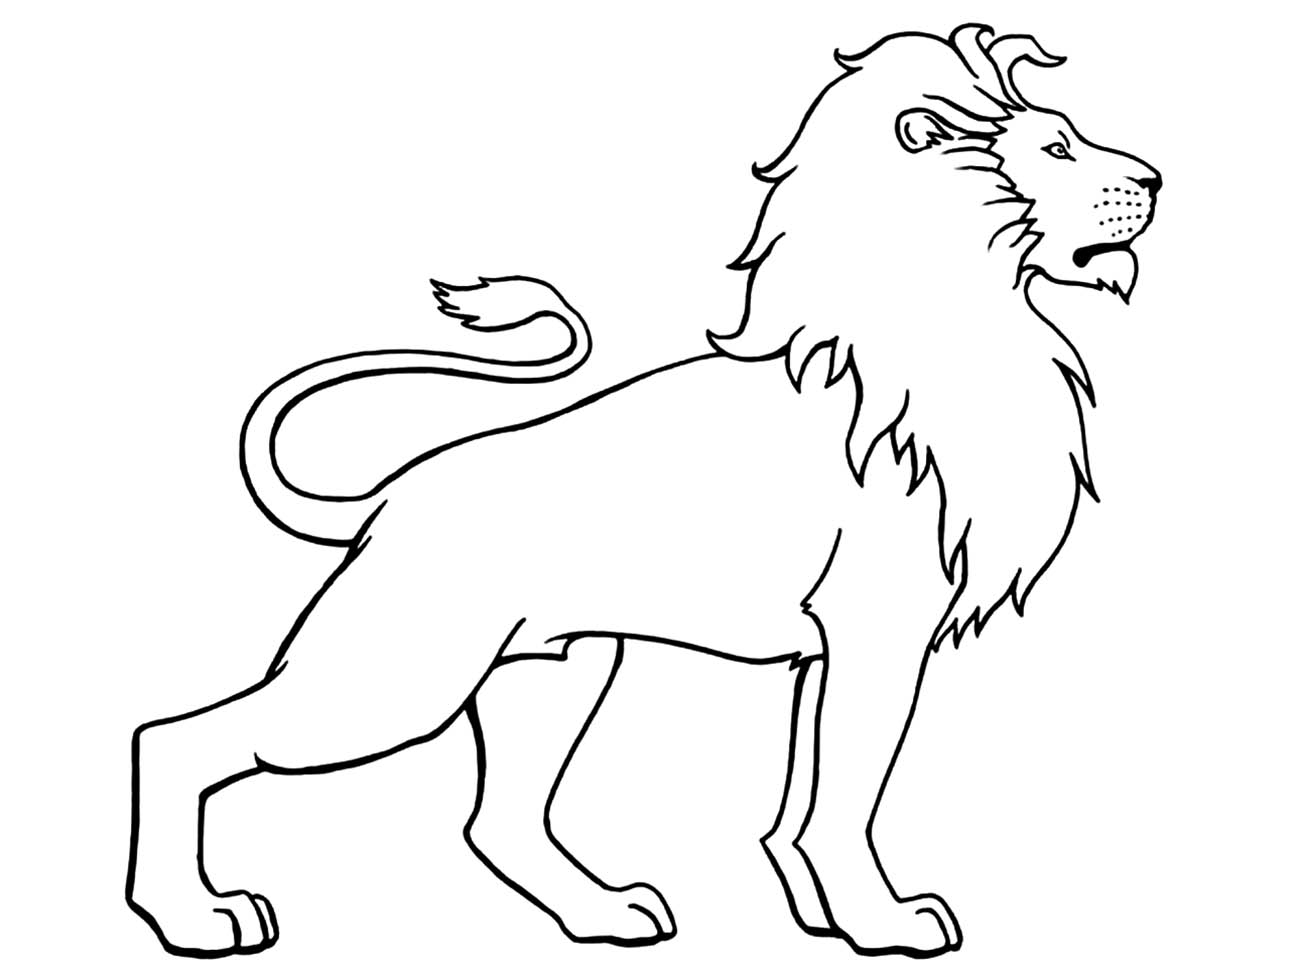 Graphite Lion Sketch, Size: A3 Paper